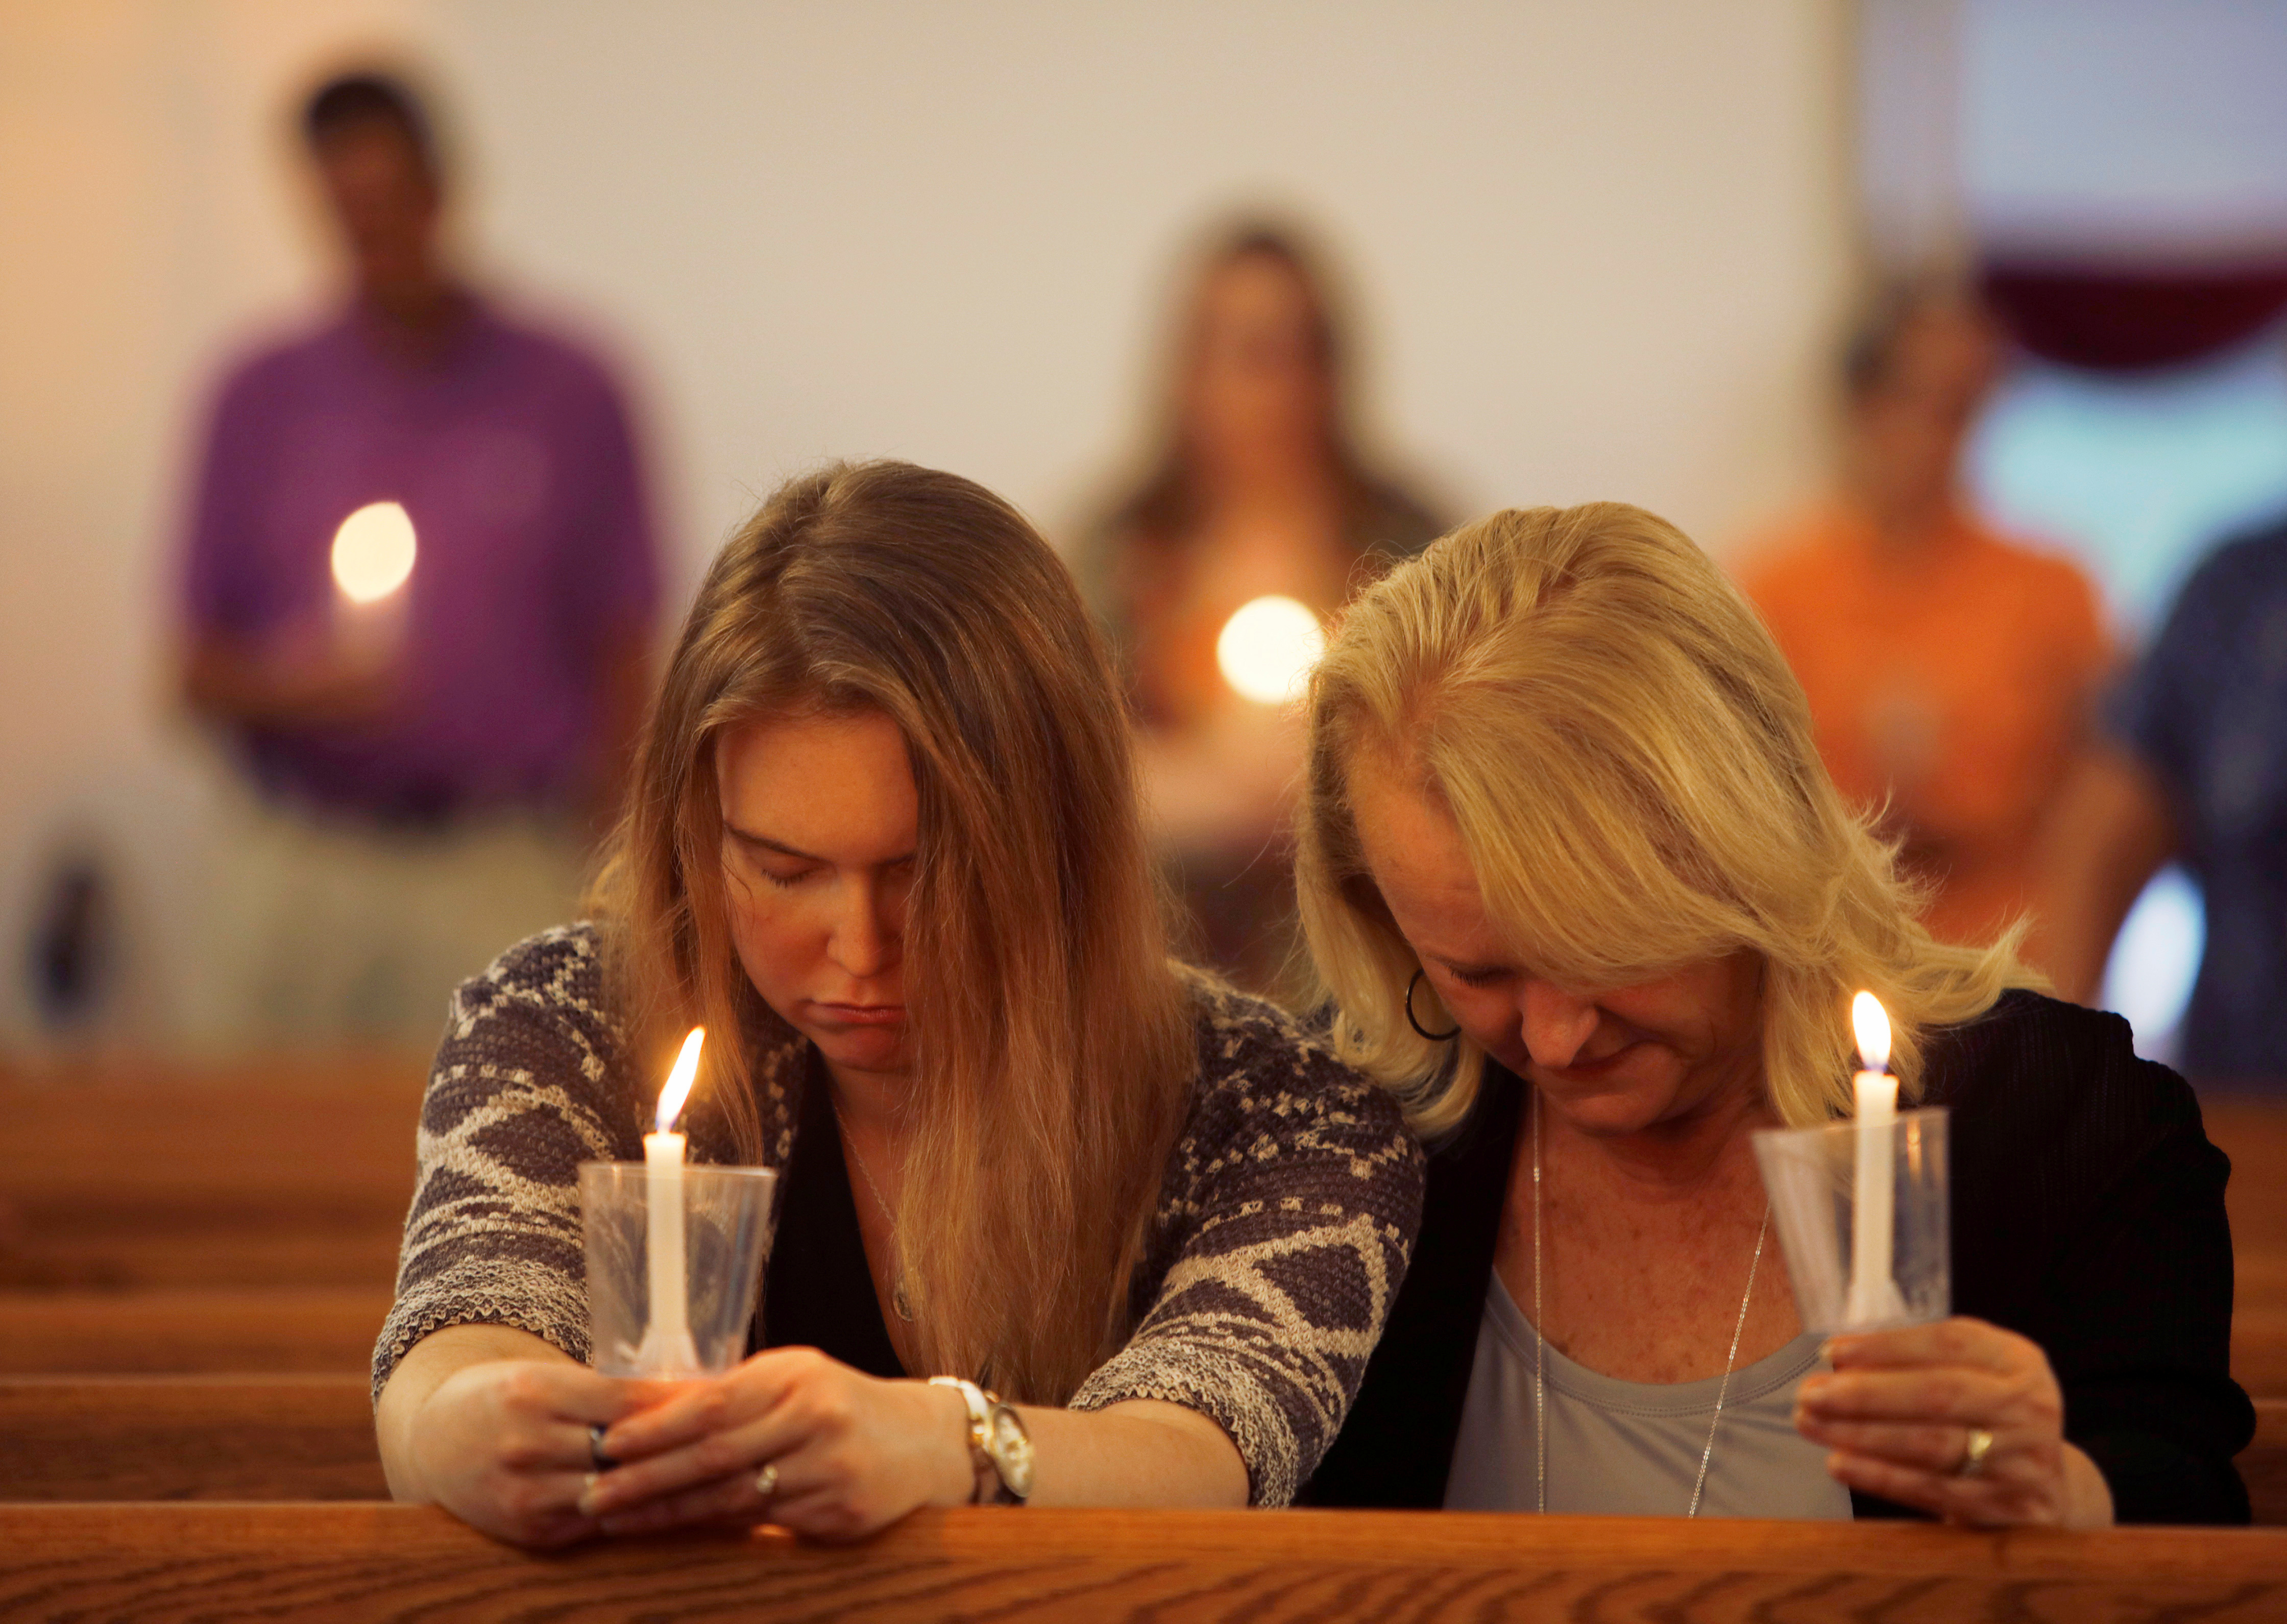 US Bishop calls for action to address gun violence after Virginia mass shooting